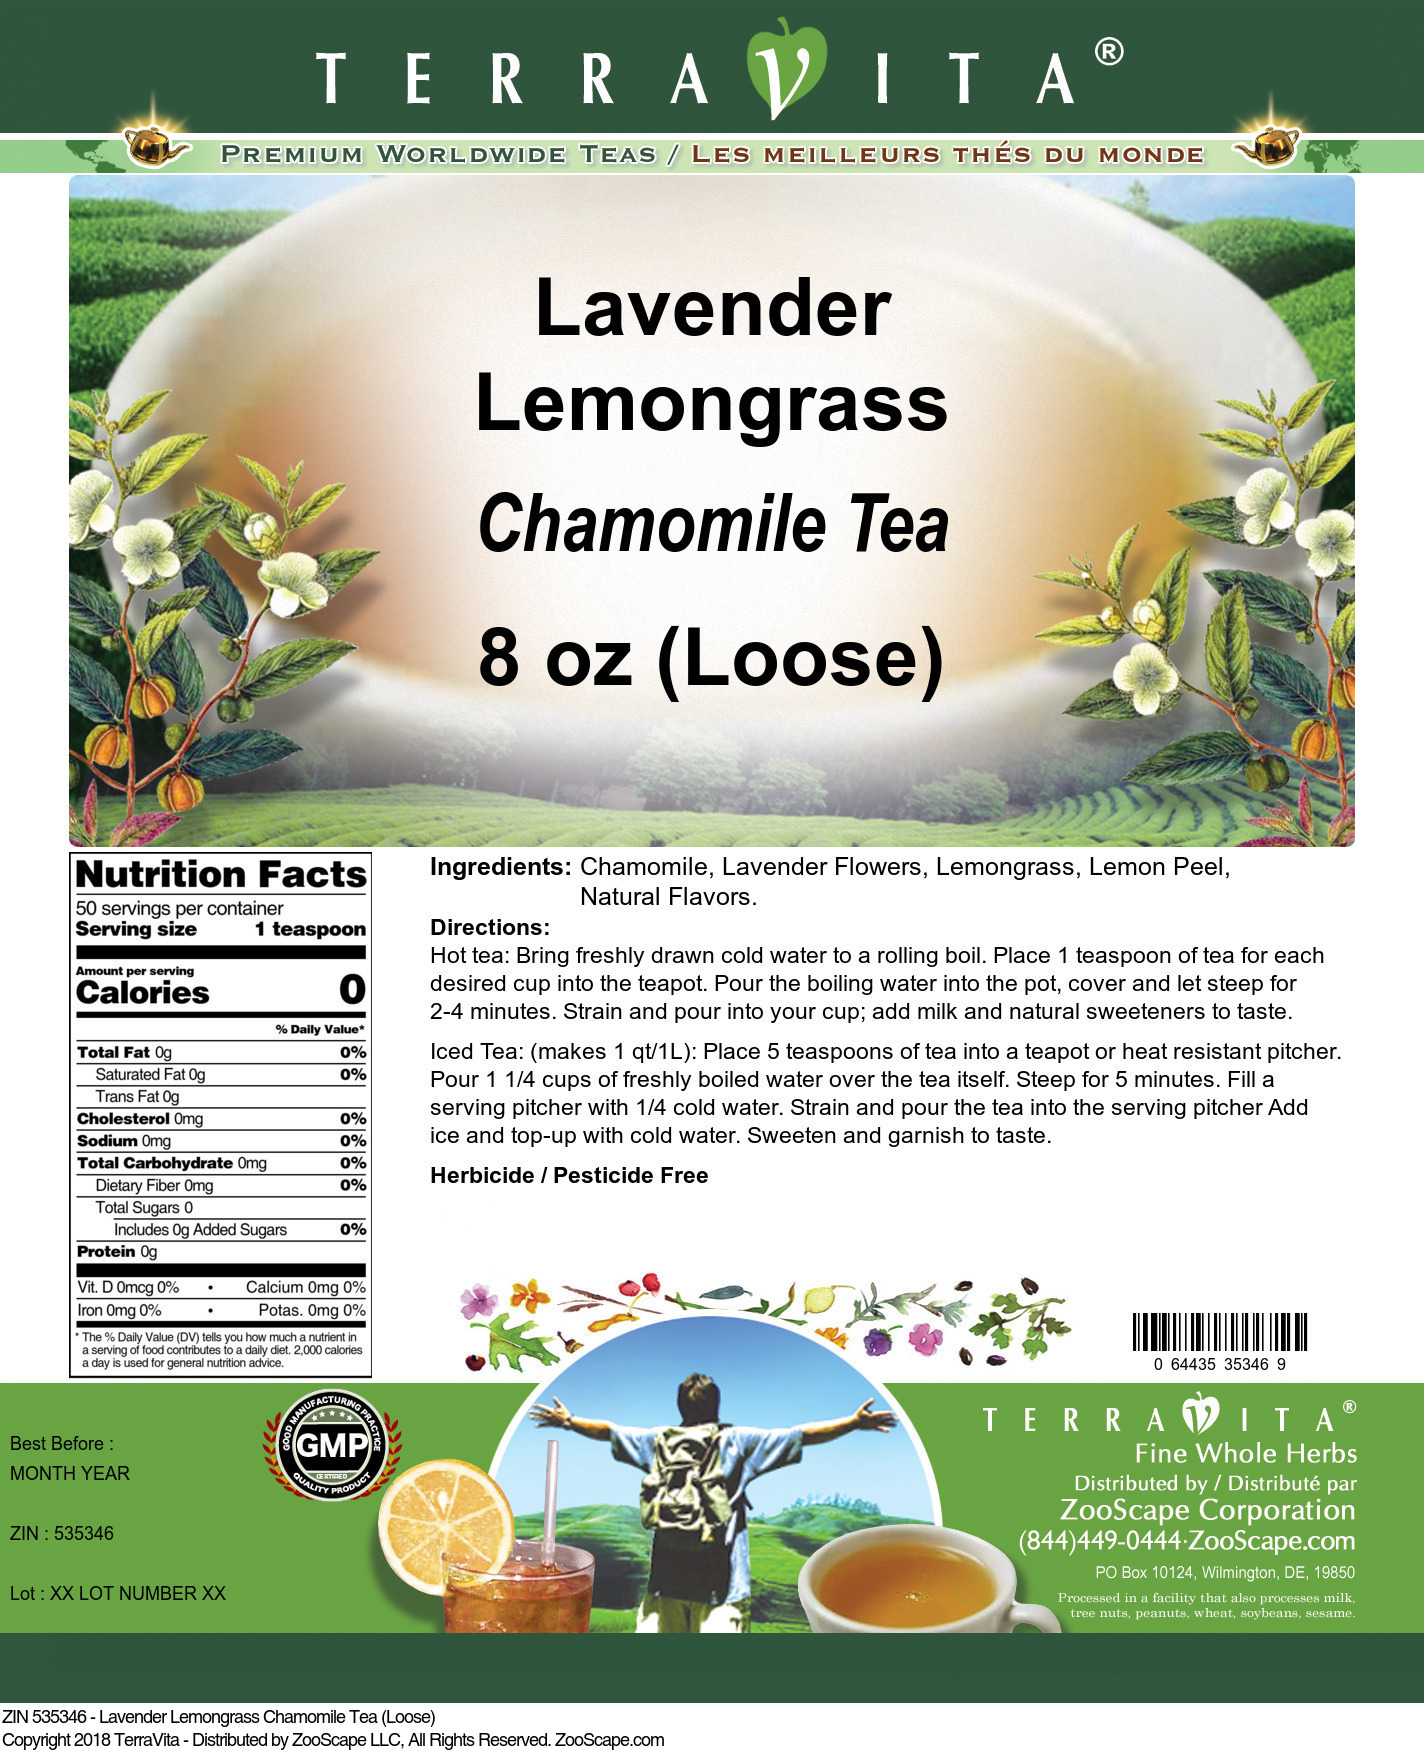 Lavender Lemongrass Chamomile Tea (Loose) - Label